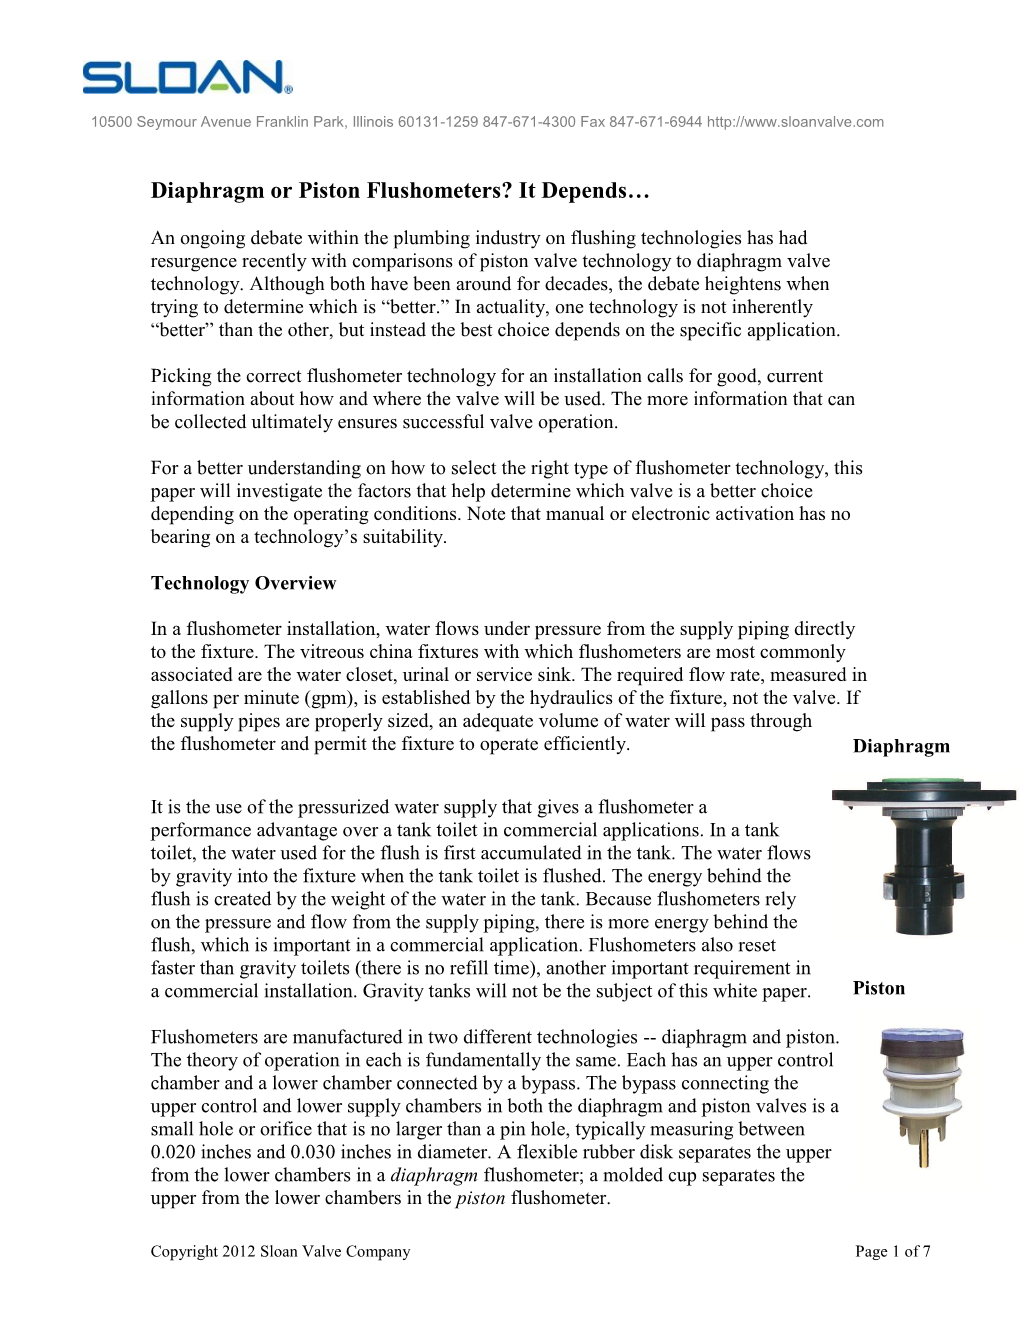 Diaphragm Vs. Piston | White Paper | Sloan